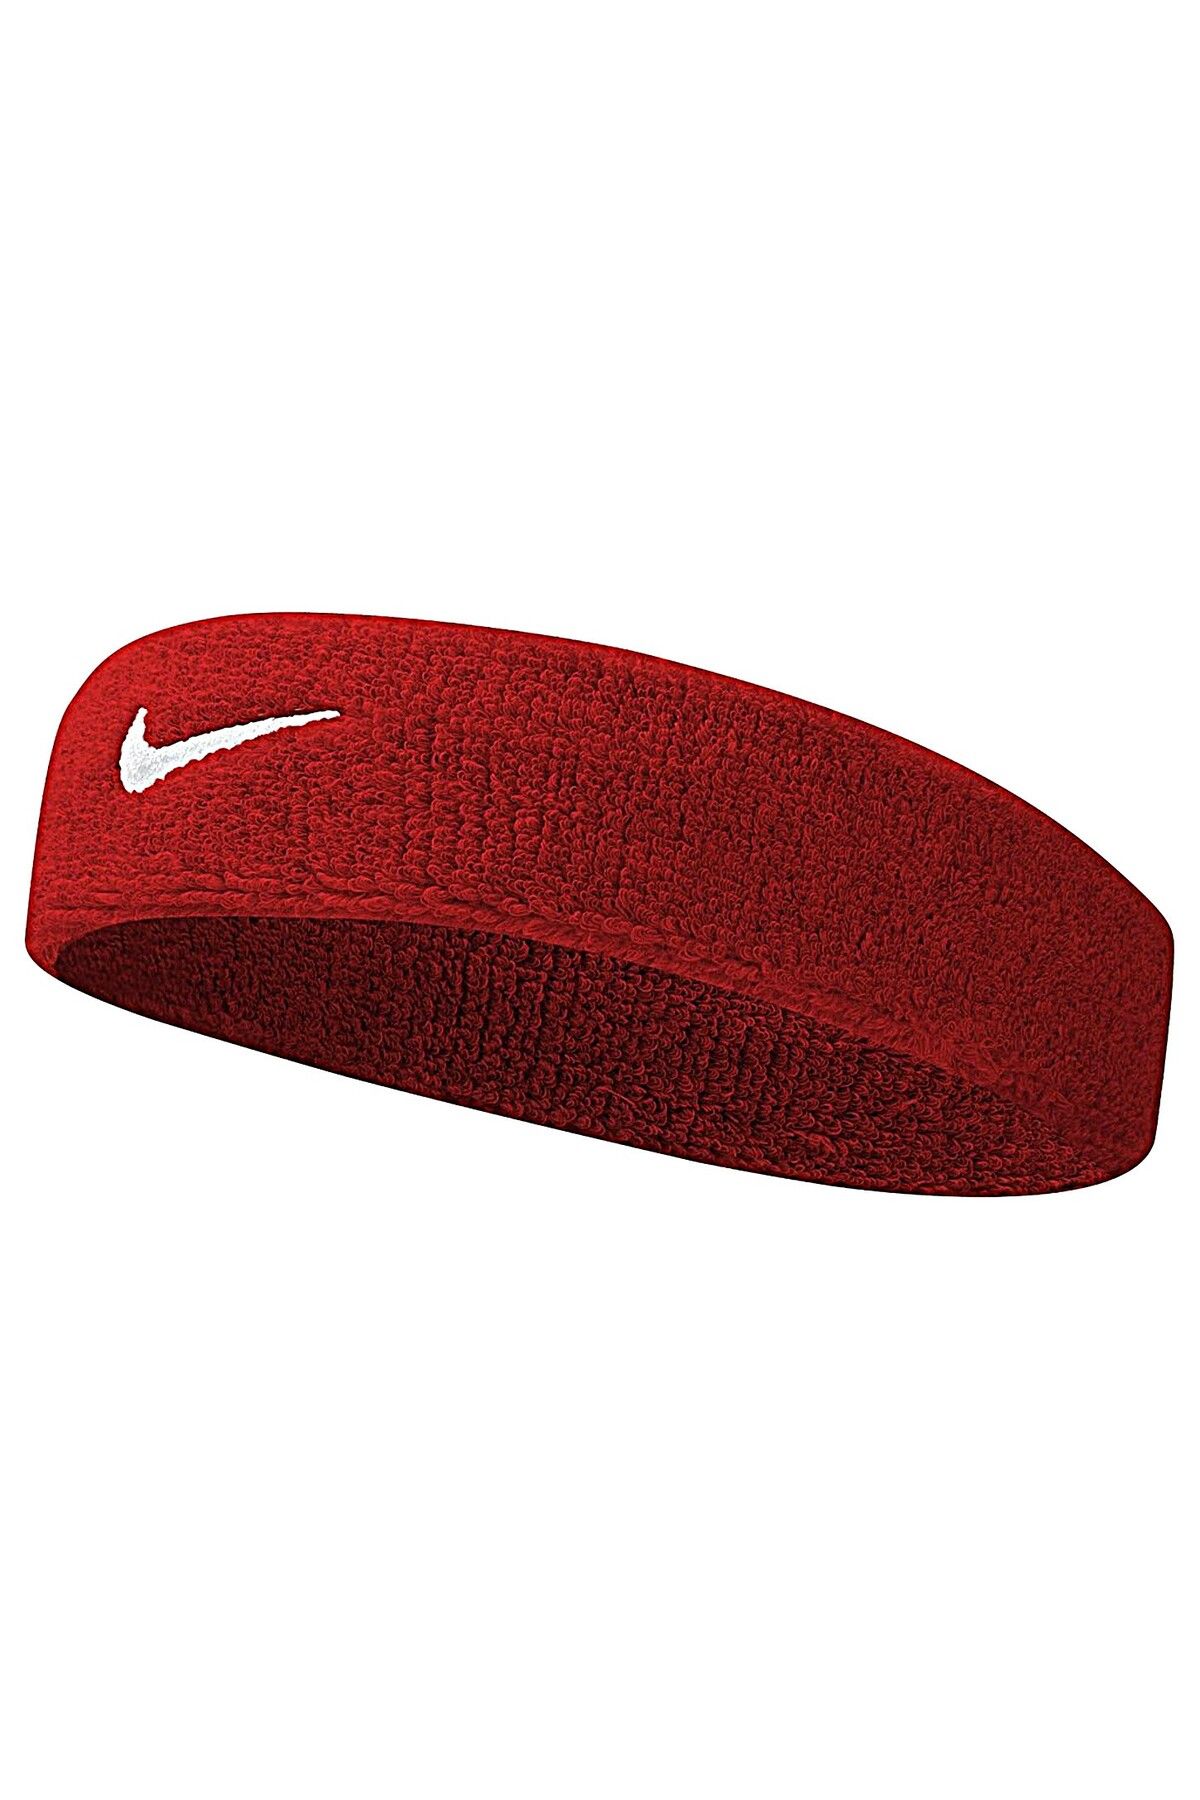 Nike Swoosh Headband Varsity Red/white Osfm, One Size/5